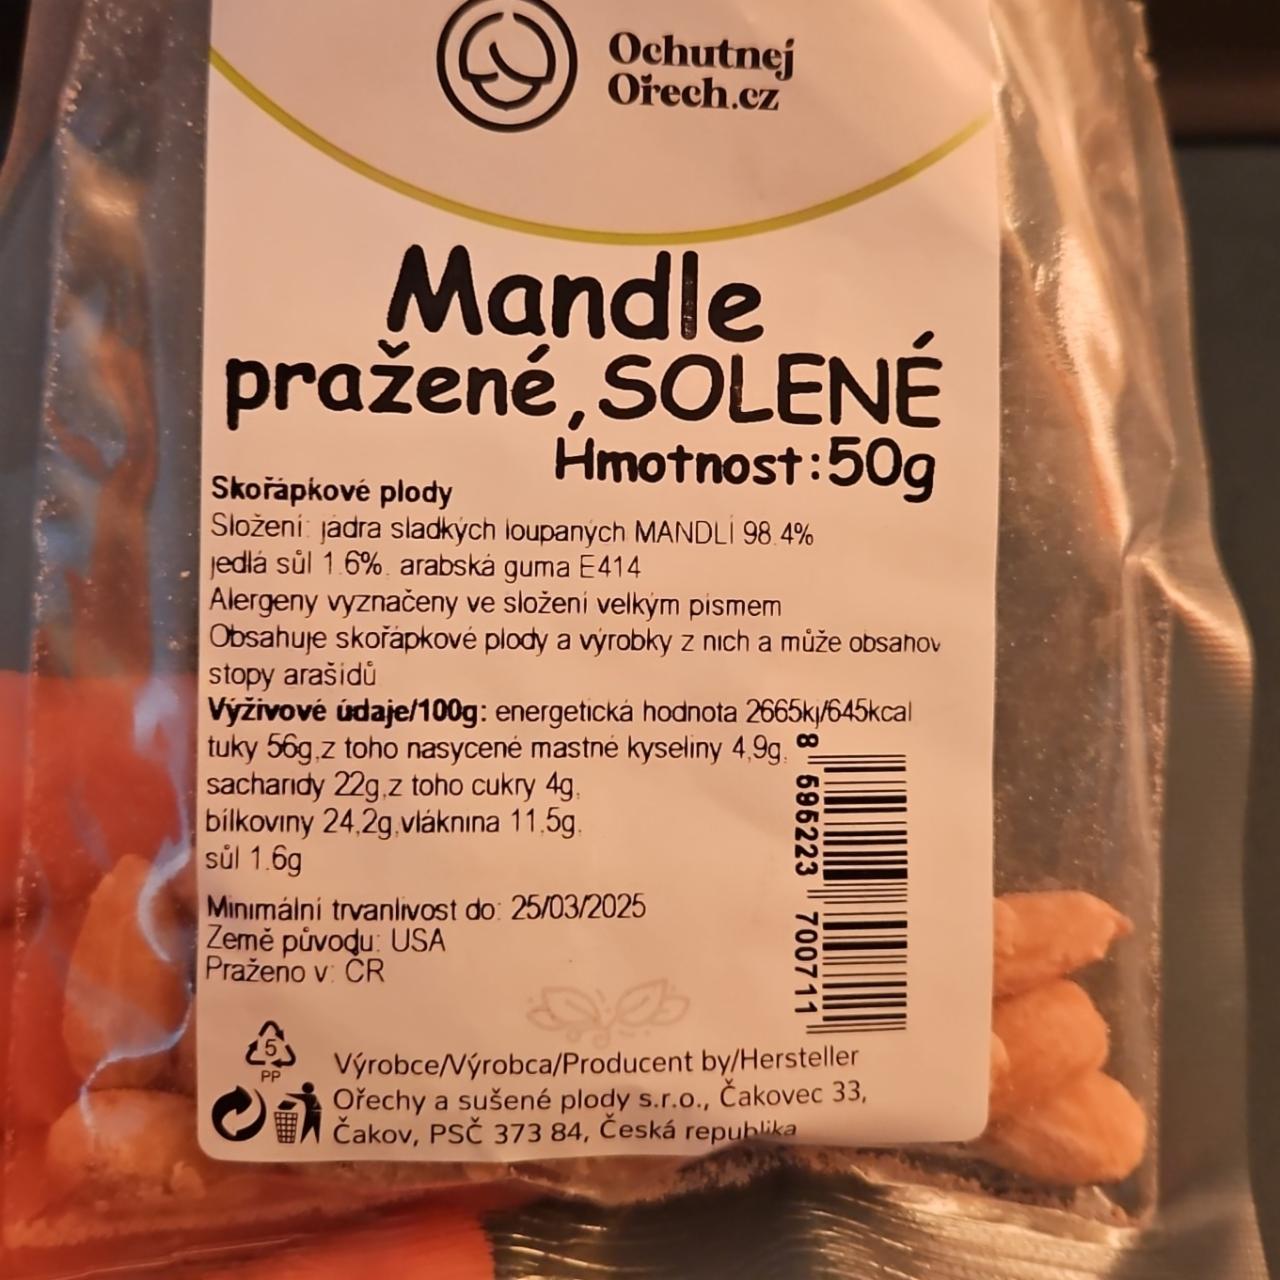 Fotografie - Mandle pražené solené Ochutnejorech.cz